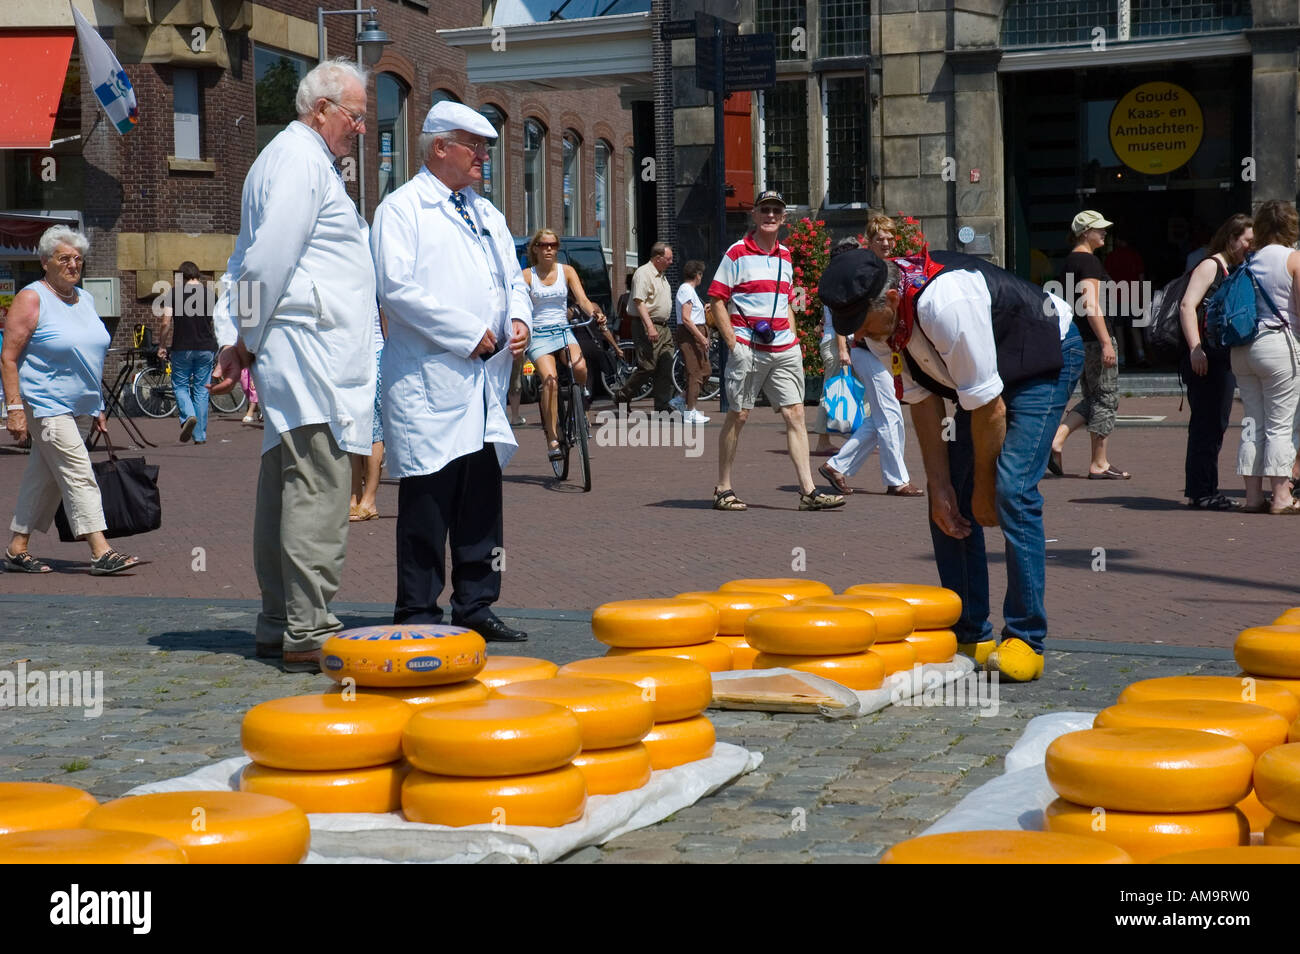 Vente de fromage Gouda Cheese Market, Pays-Bas Banque D'Images